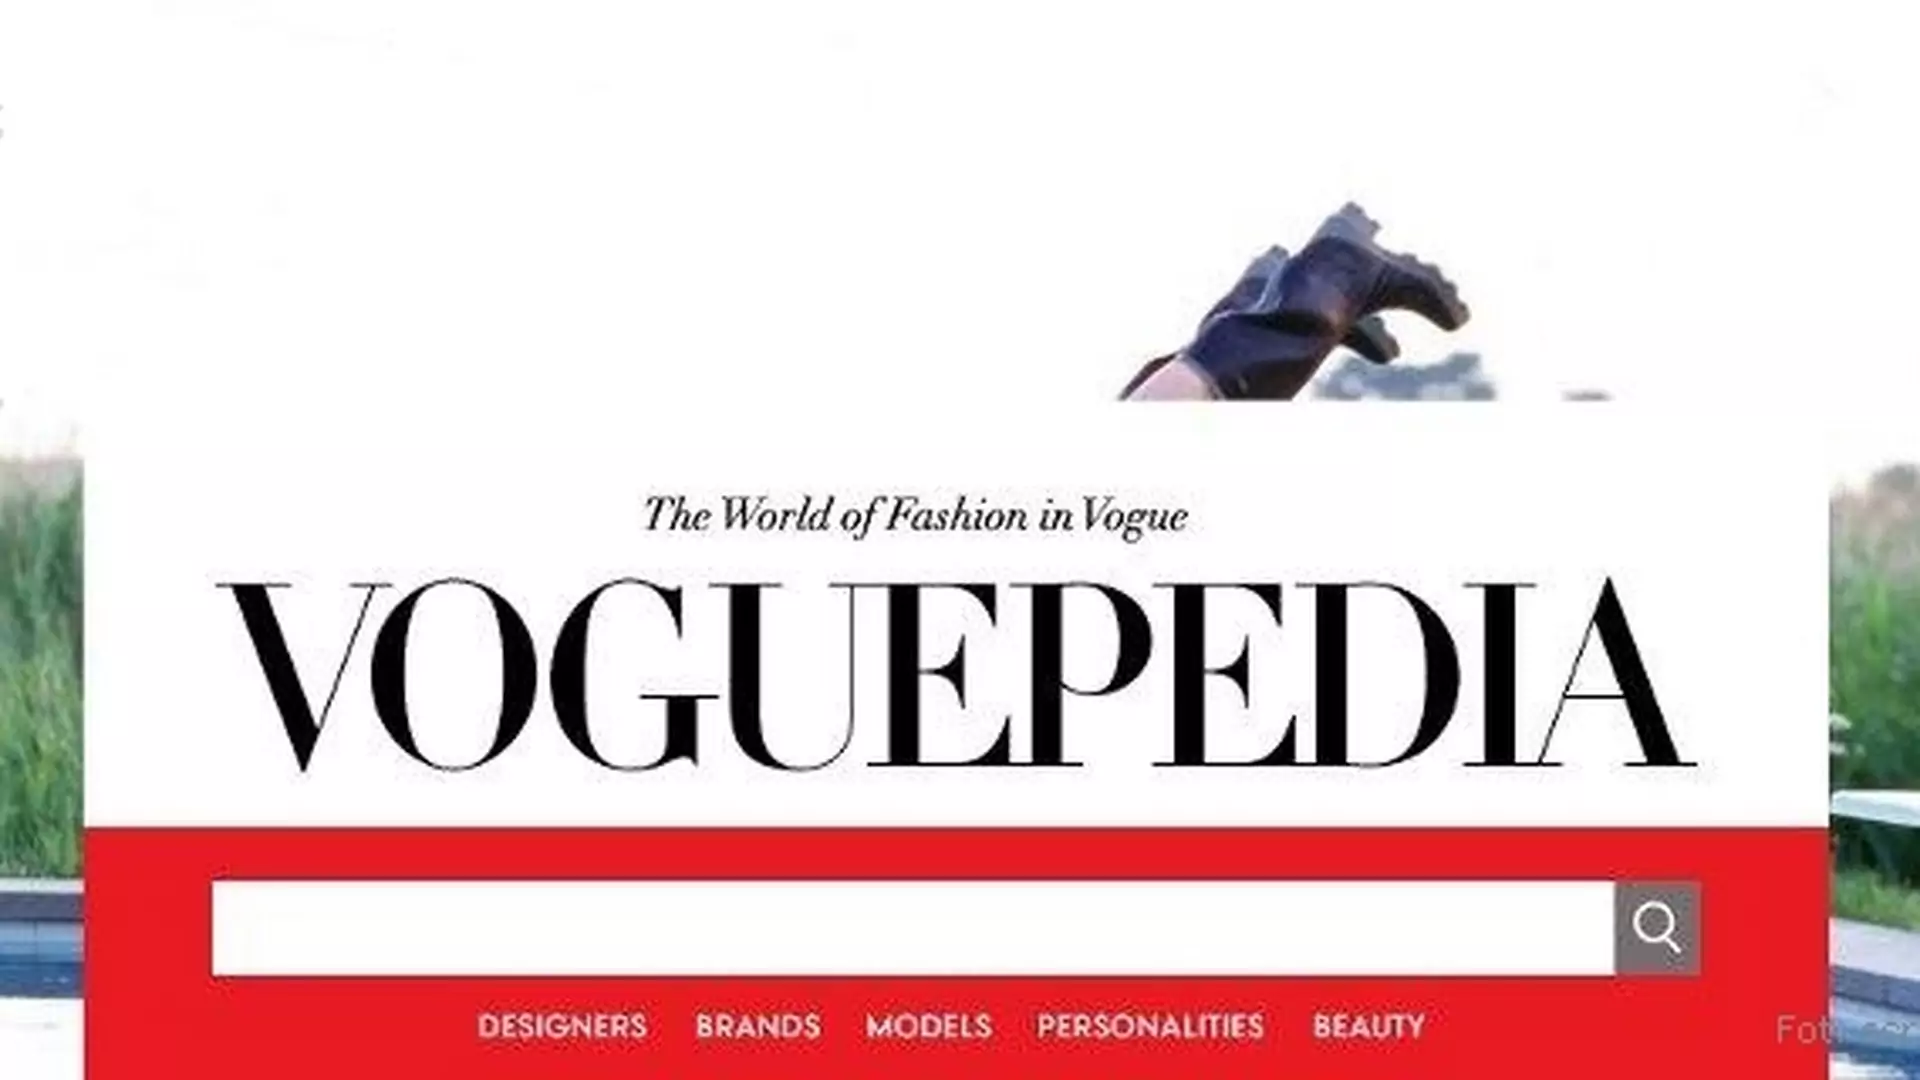 Voguepedia - internetowa encyklopedia mody